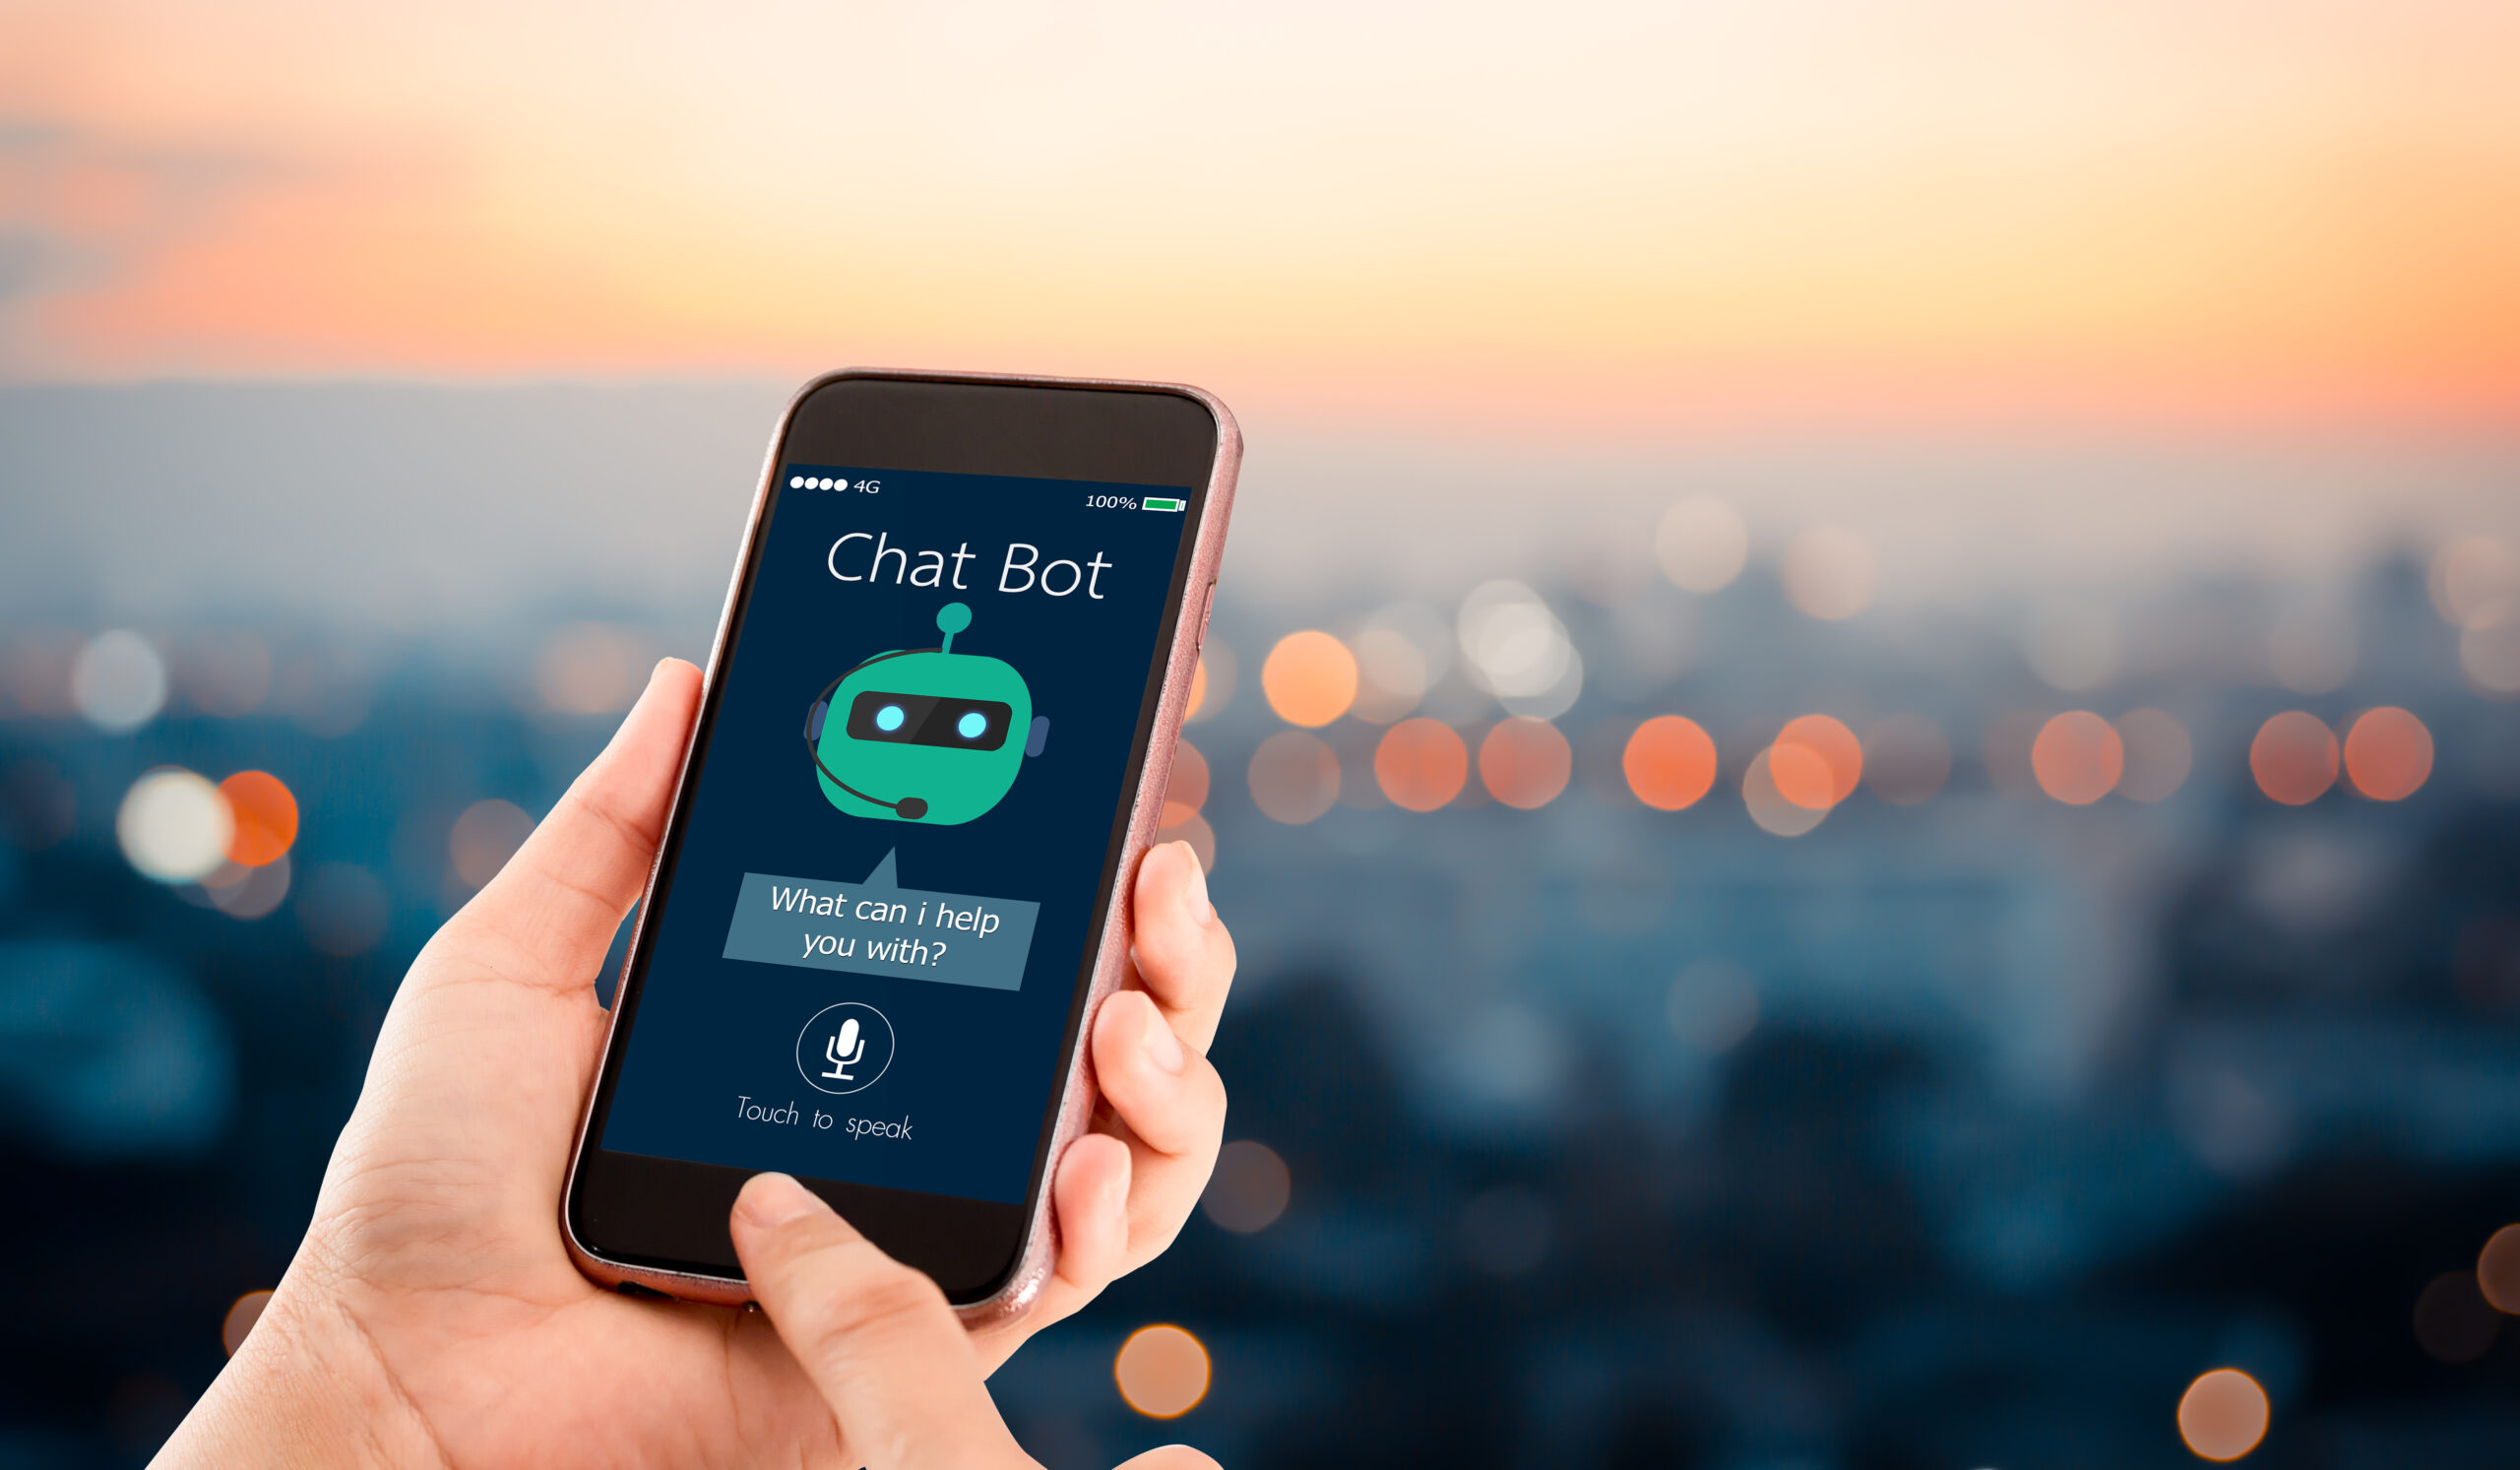 online artificial intelligence best ai chatbot